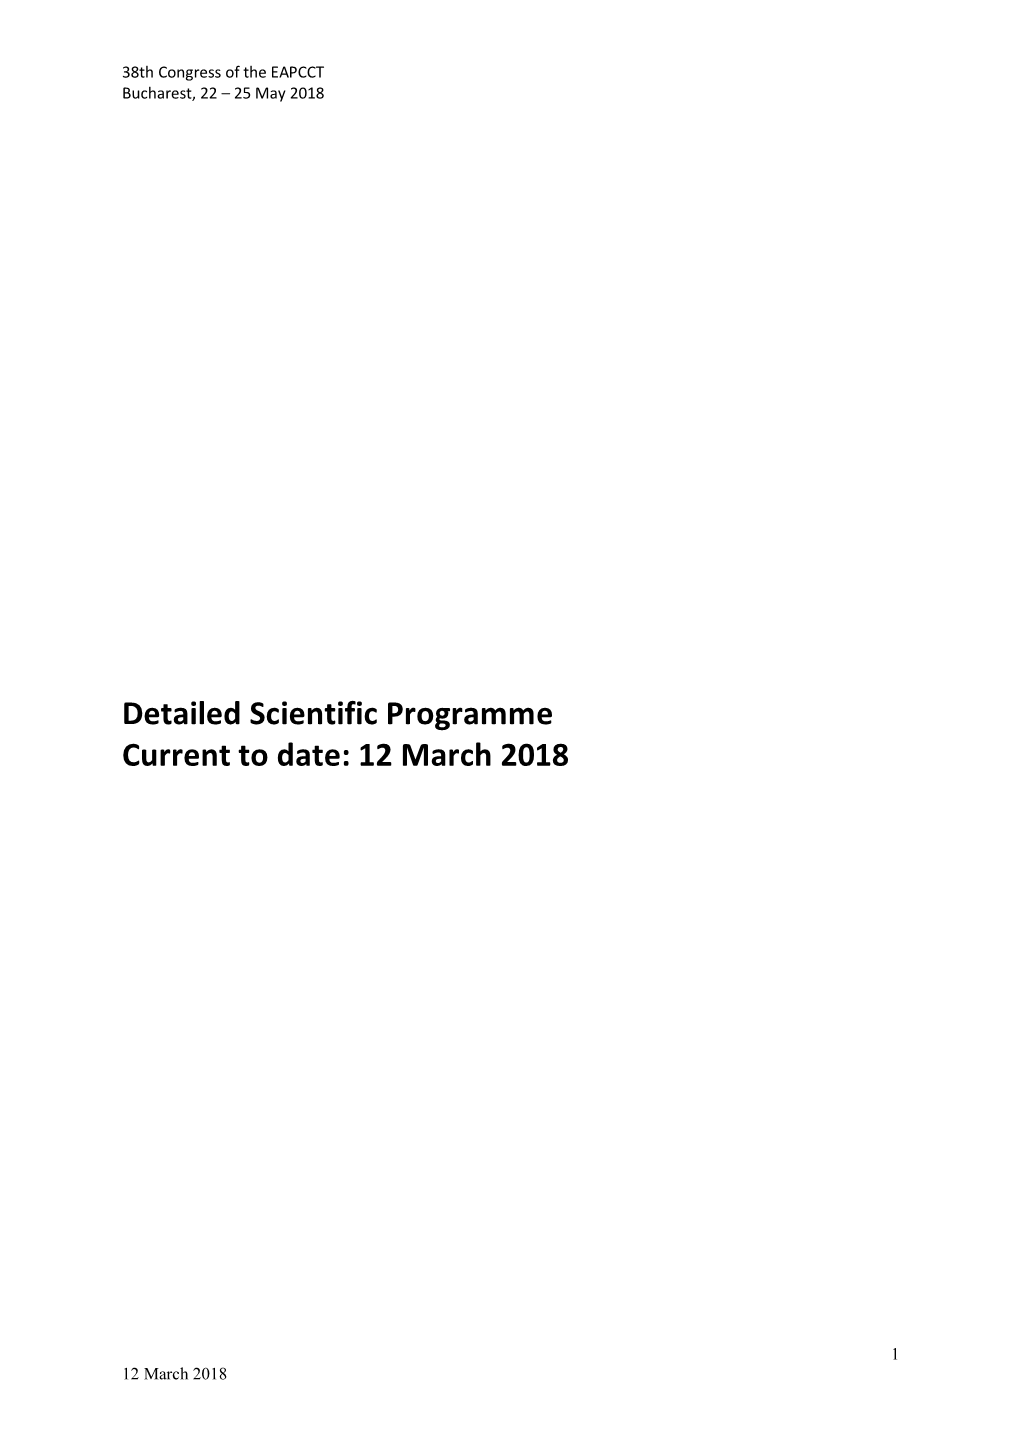 Scientific Programme EAPCCT Congress Bucharest 12 March 2018